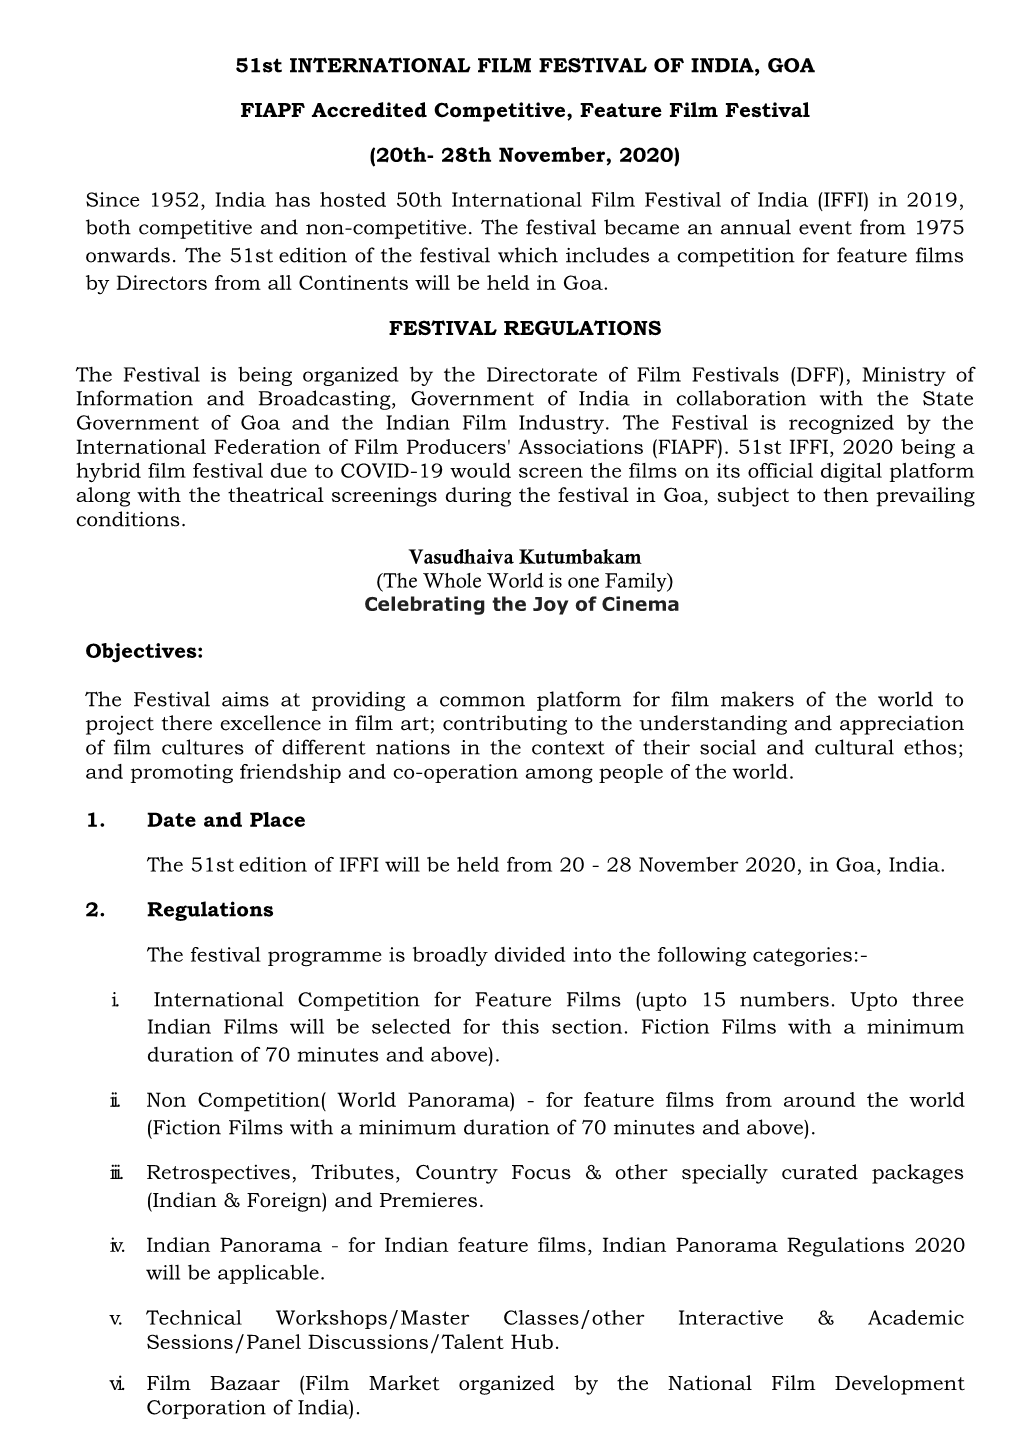 Regulations 0F 51St International Film Festival of India,2020(Hybrid Film Festival)